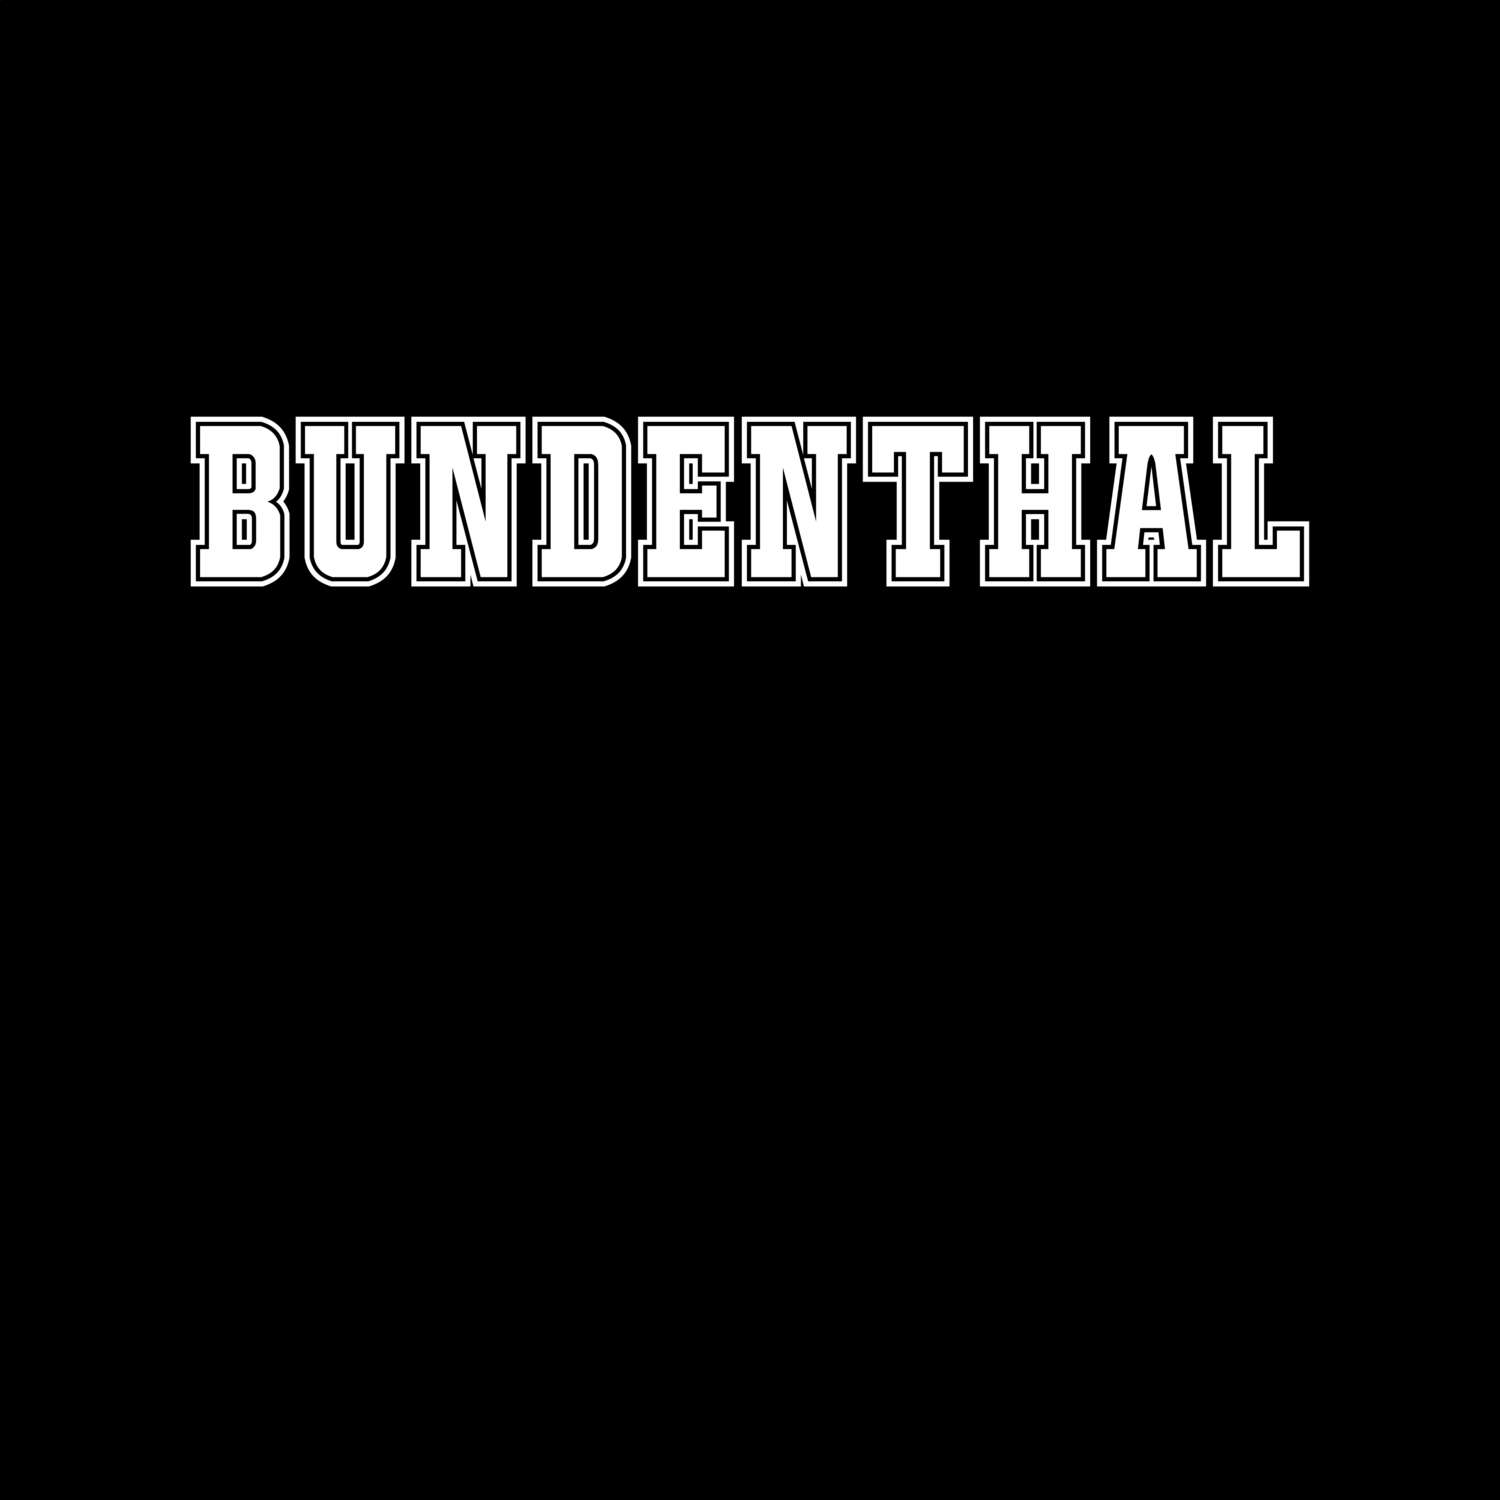 Bundenthal T-Shirt »Classic«